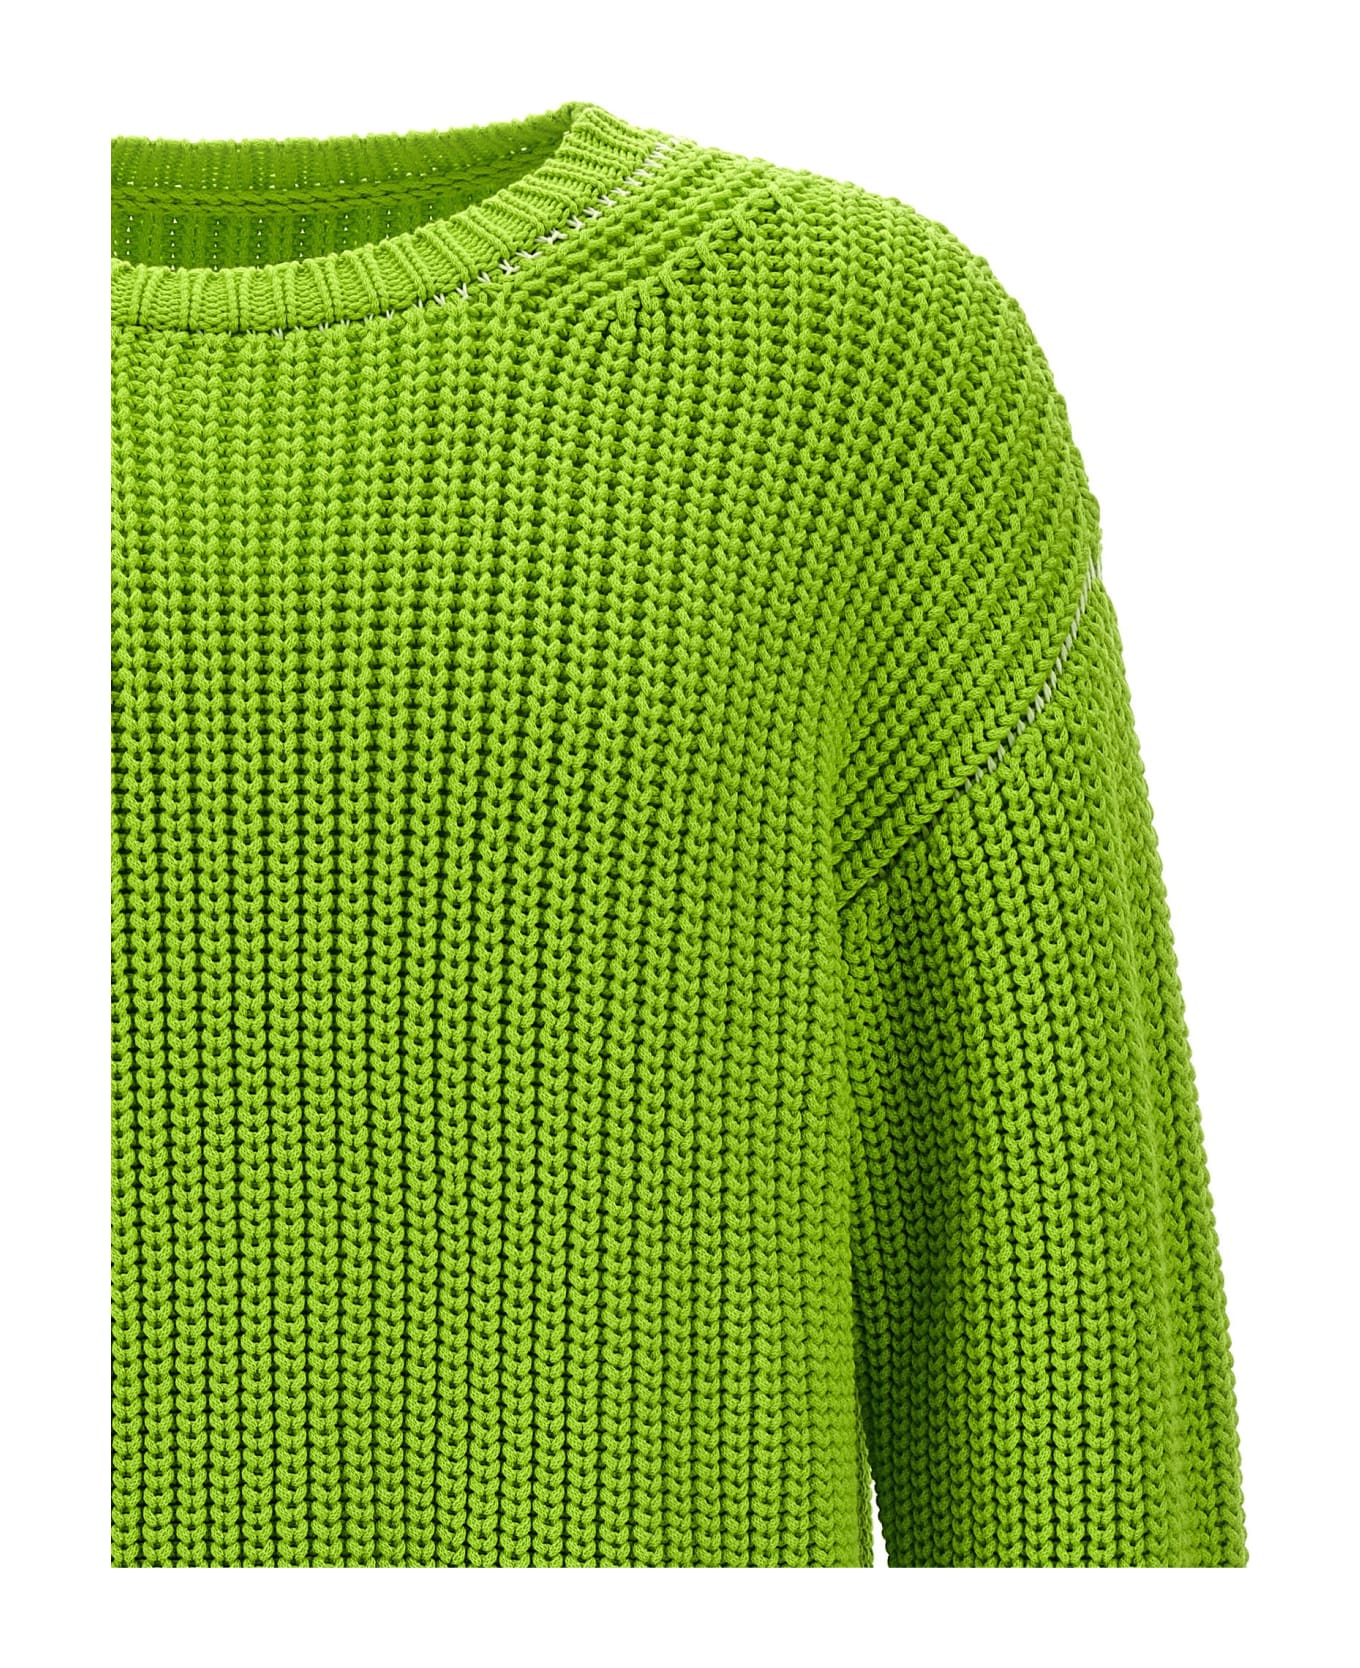 MM6 Maison Margiela Crewneck Sweater - Green